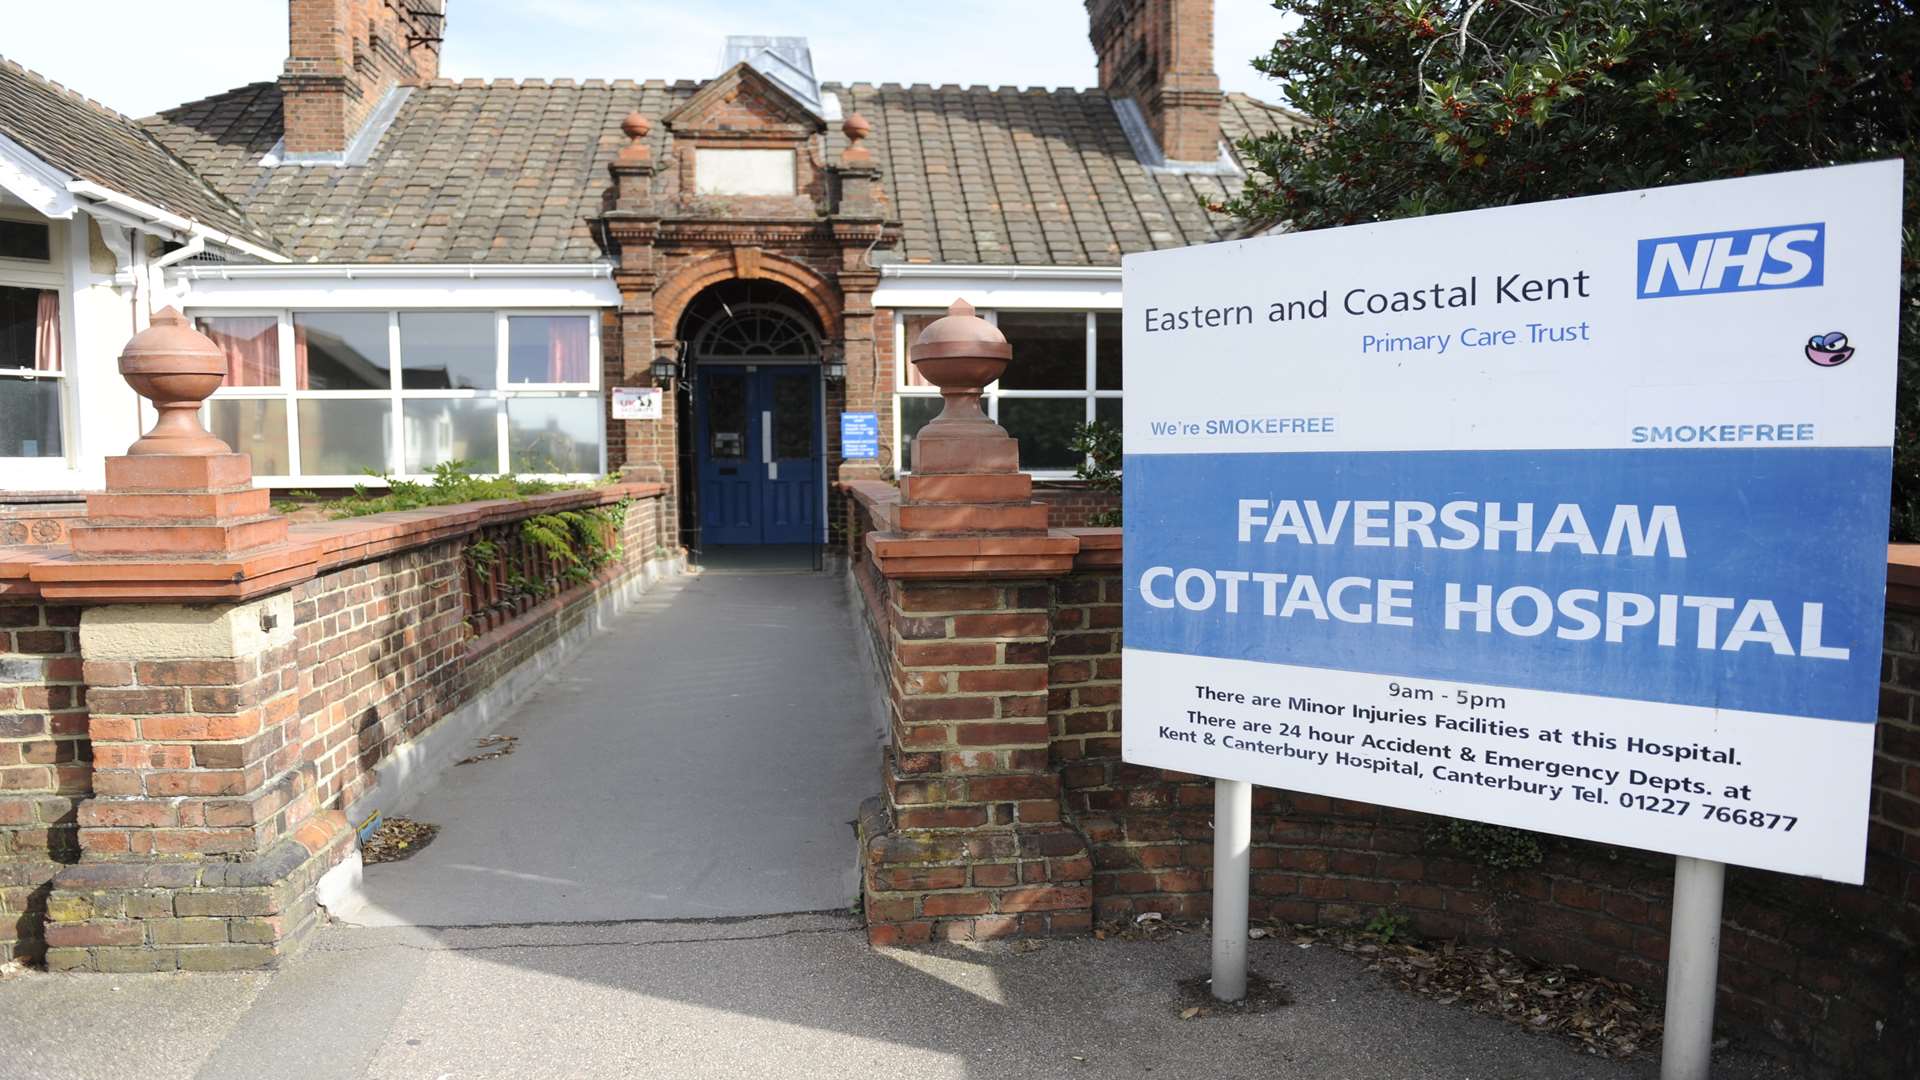 Faversham Cottage Hospital